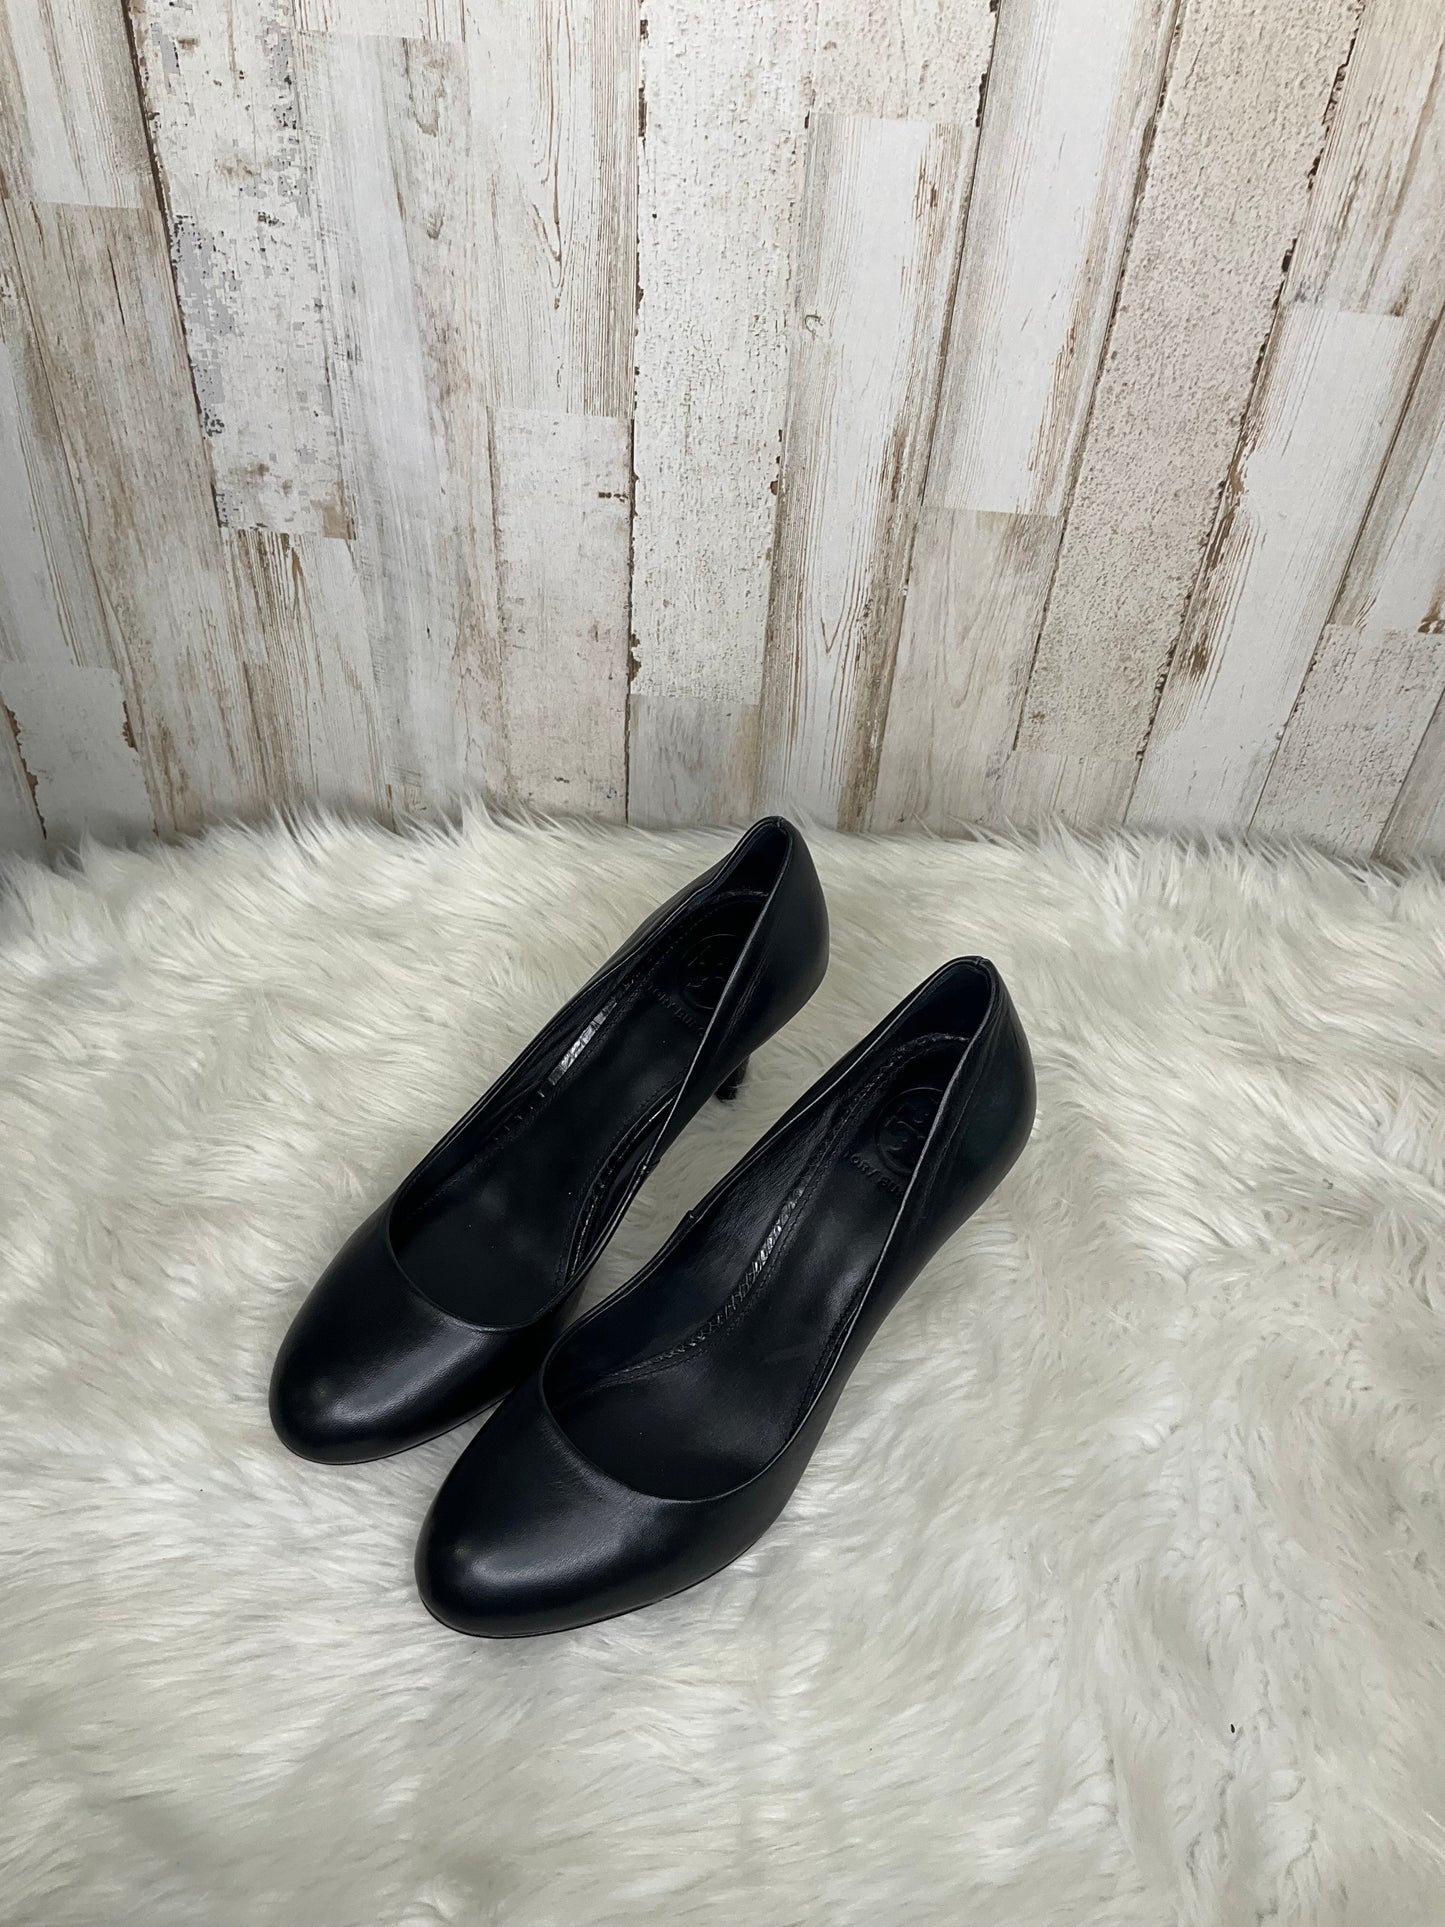 Black Shoes Heels Stiletto Tory Burch, Size 8